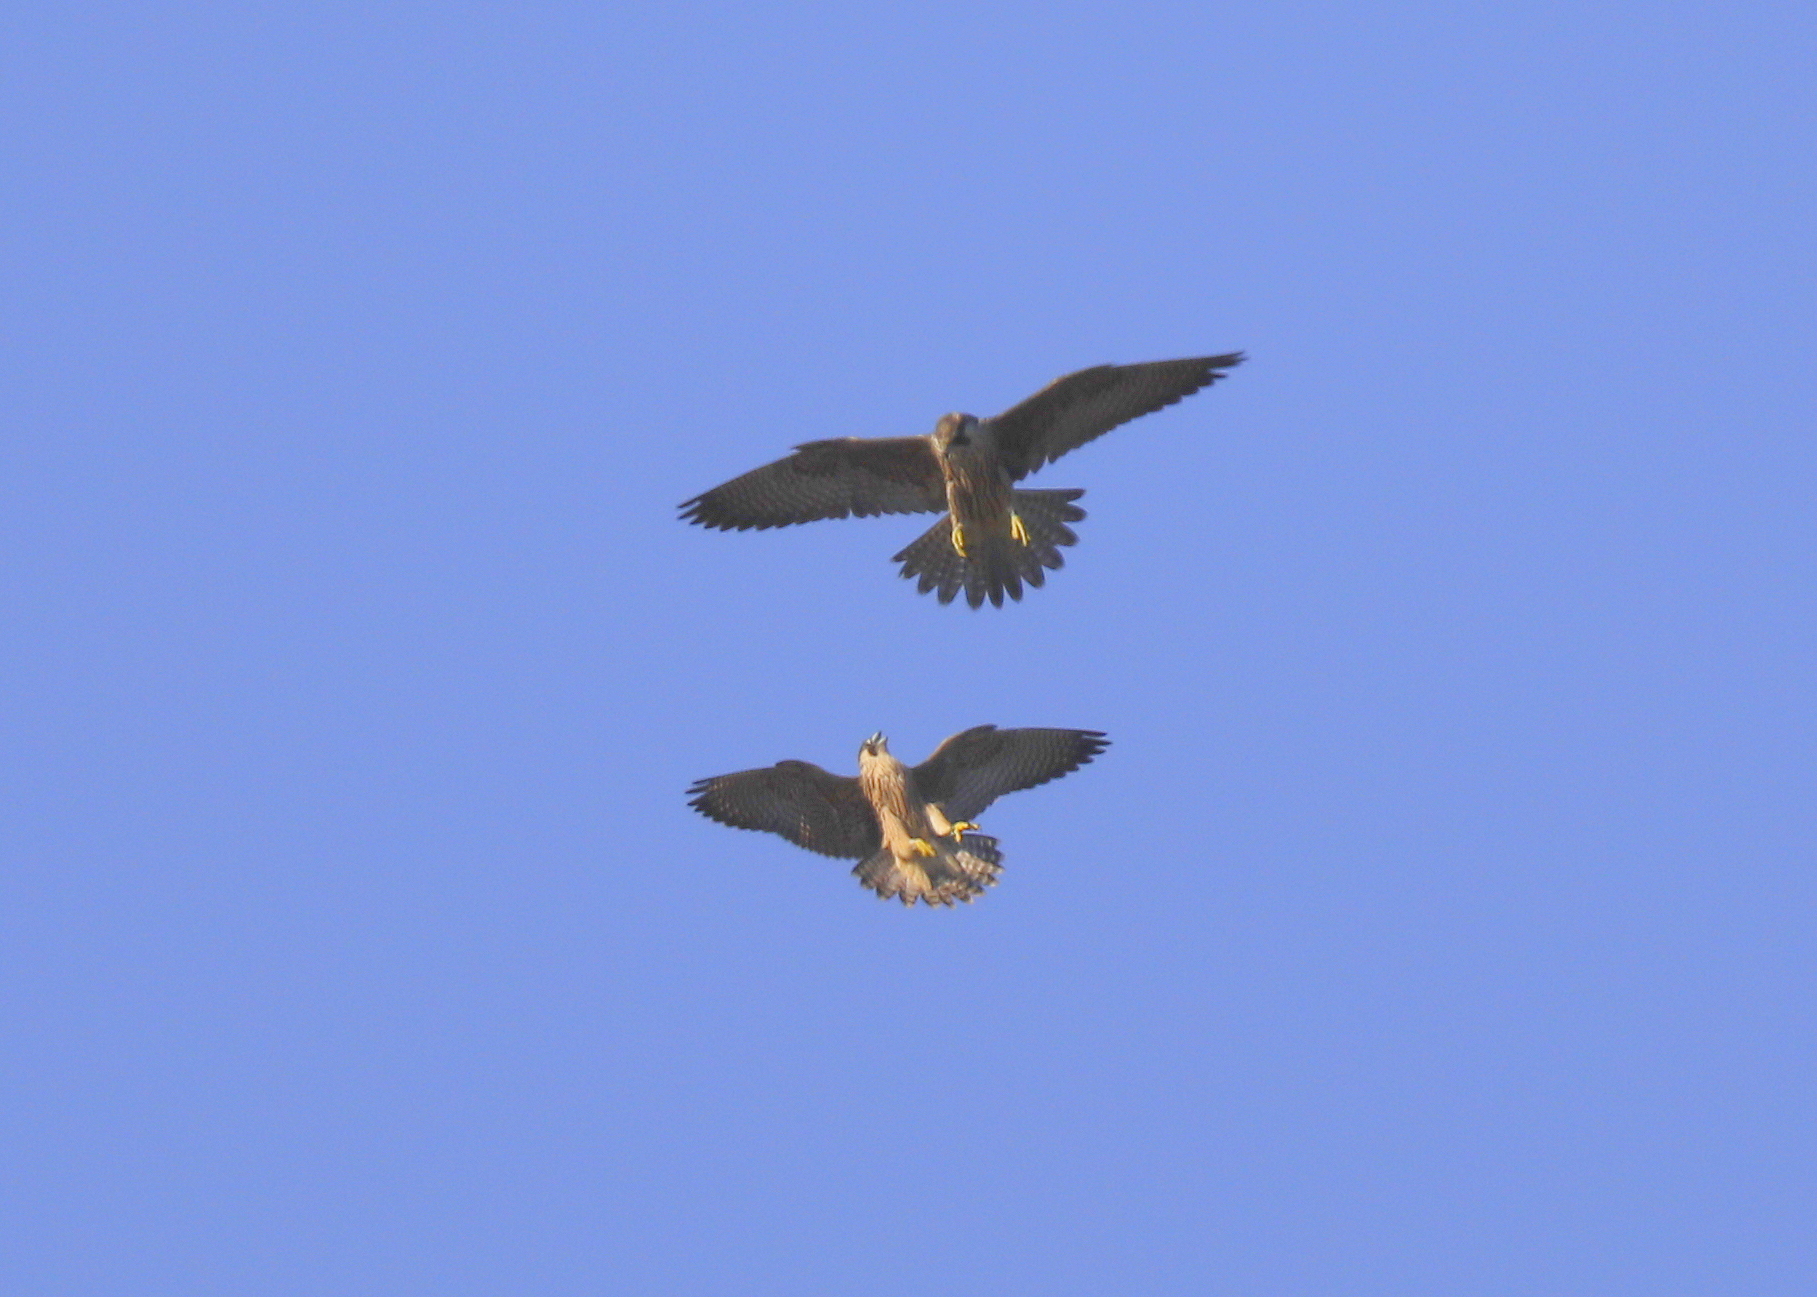 Peregrine Falcon fledglings in mock combat